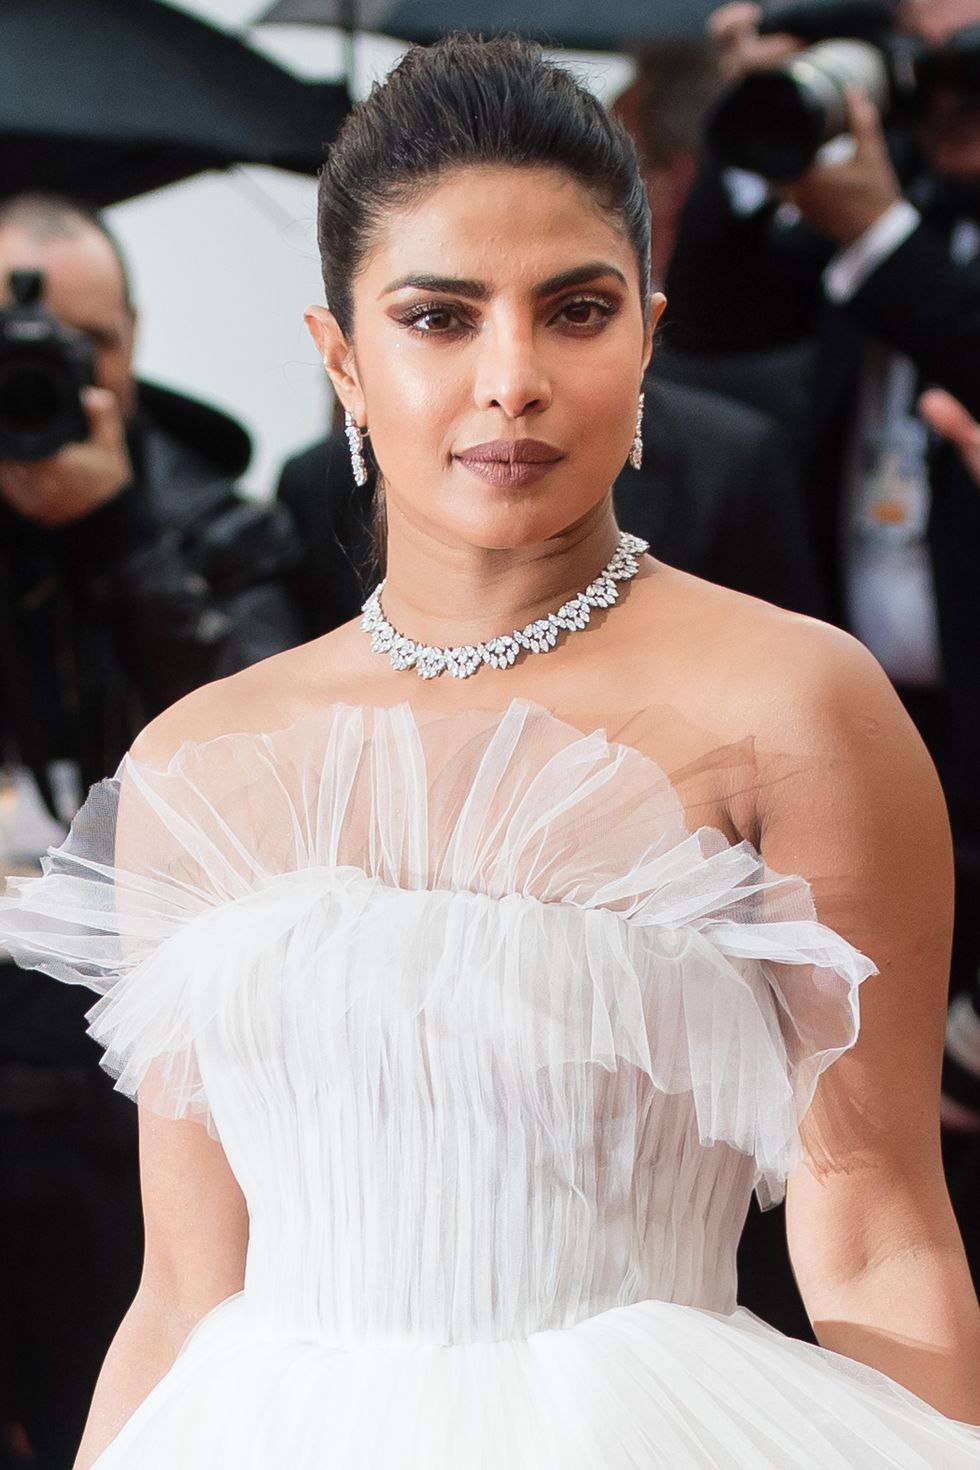 Priyanka Chopra wore an actual wedding dress on the Cannes red carpet